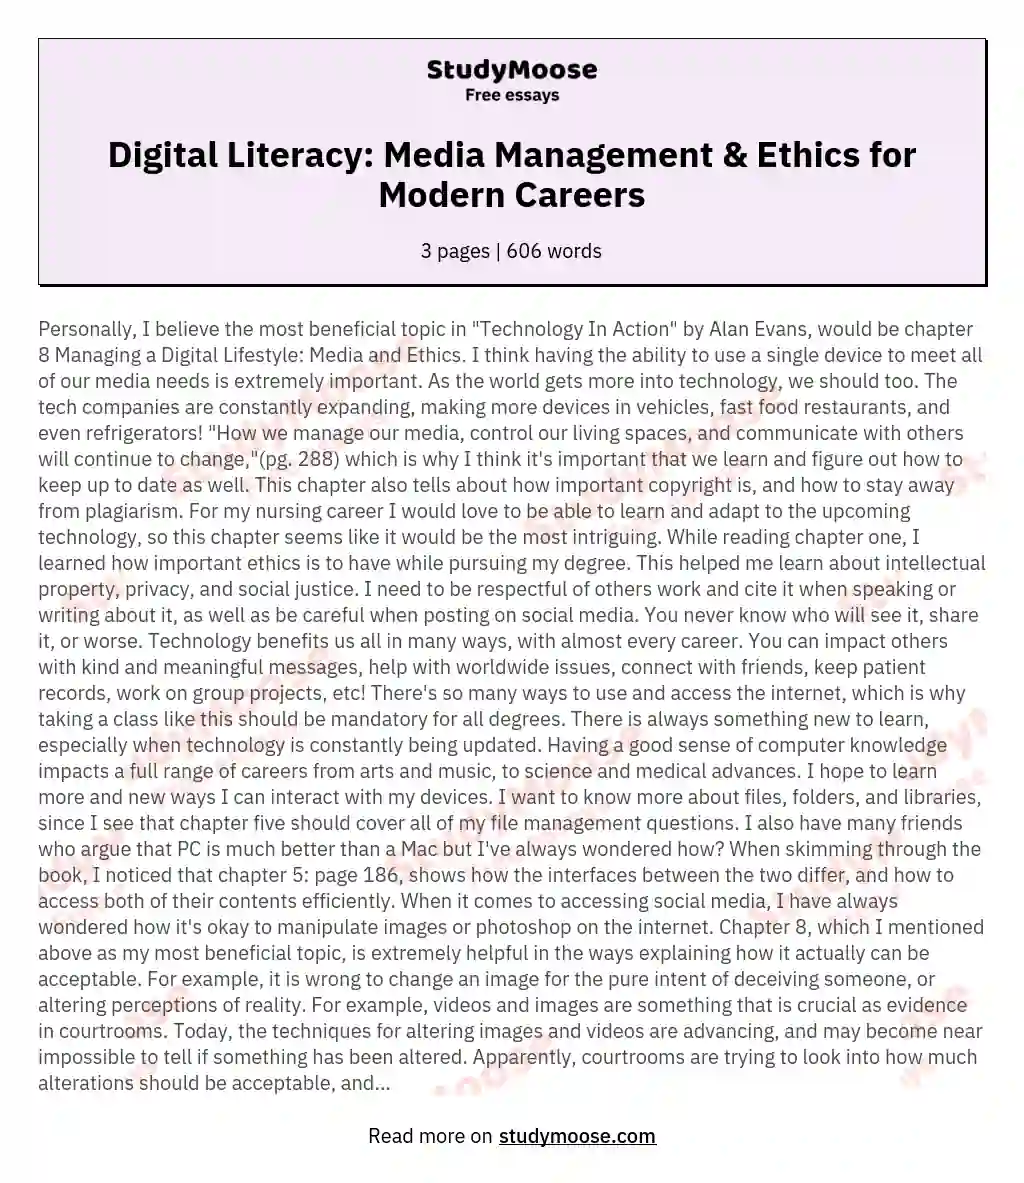 Digital Literacy: Media Management & Ethics for Modern Careers essay